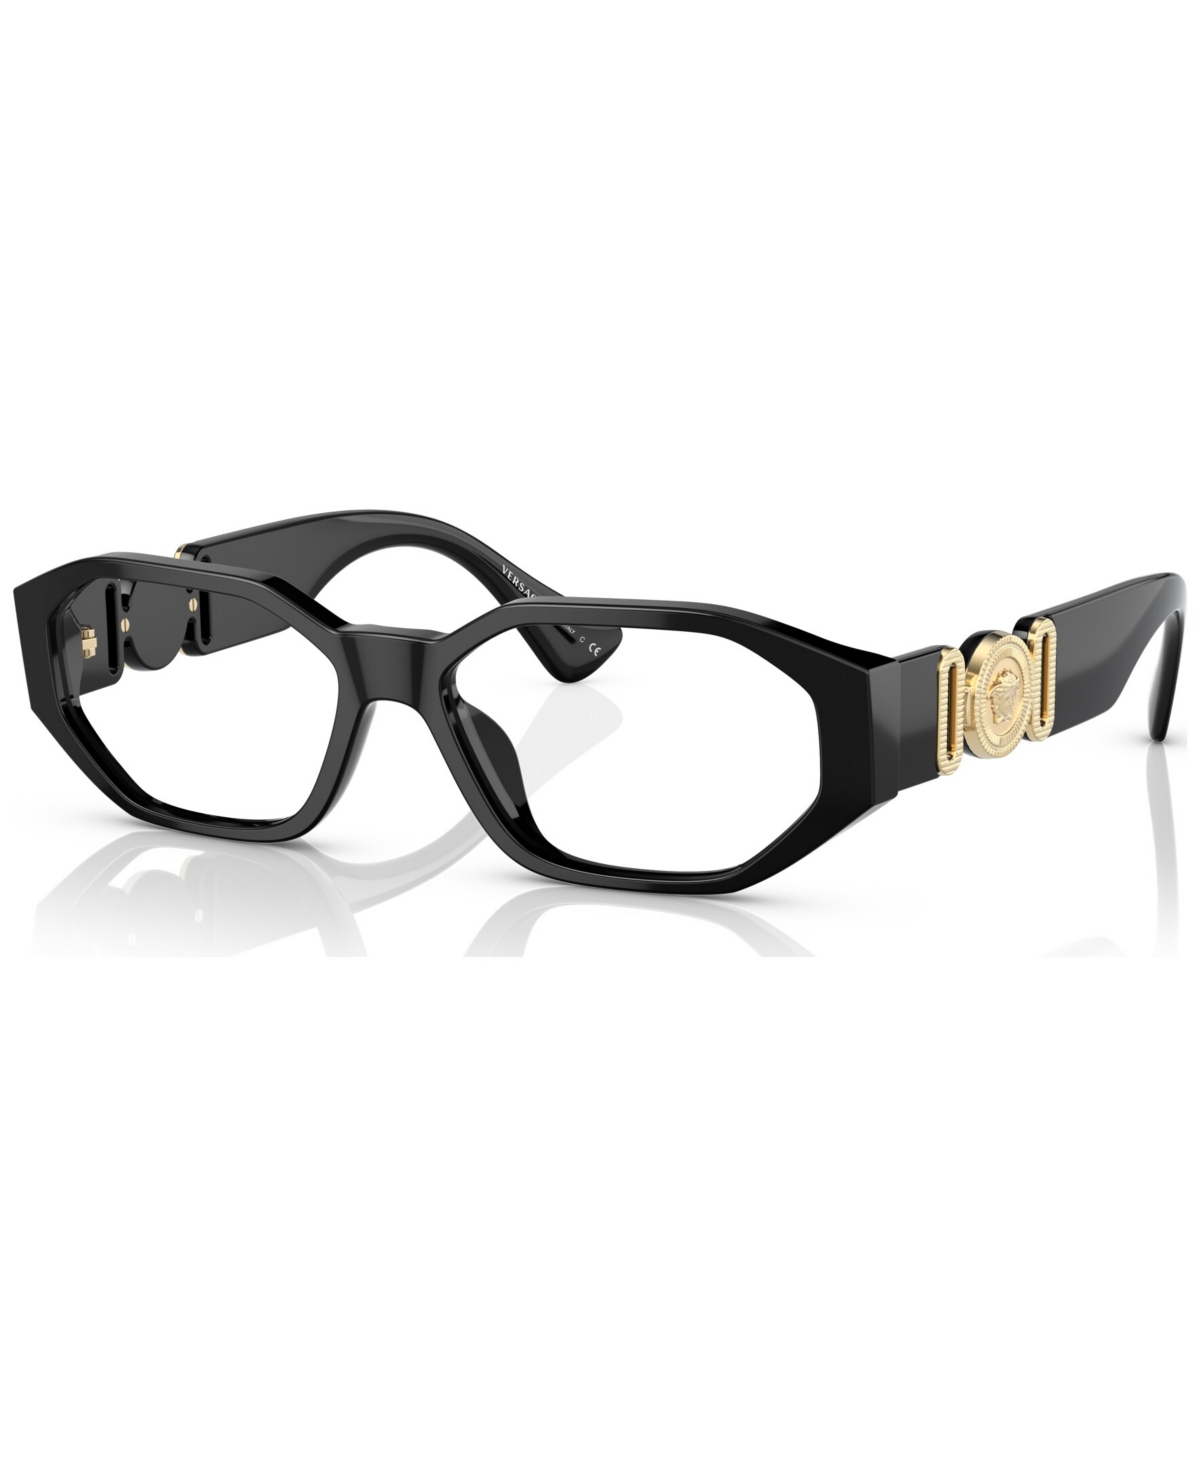 Men's Irregular Eyeglasses VE3320U - Black